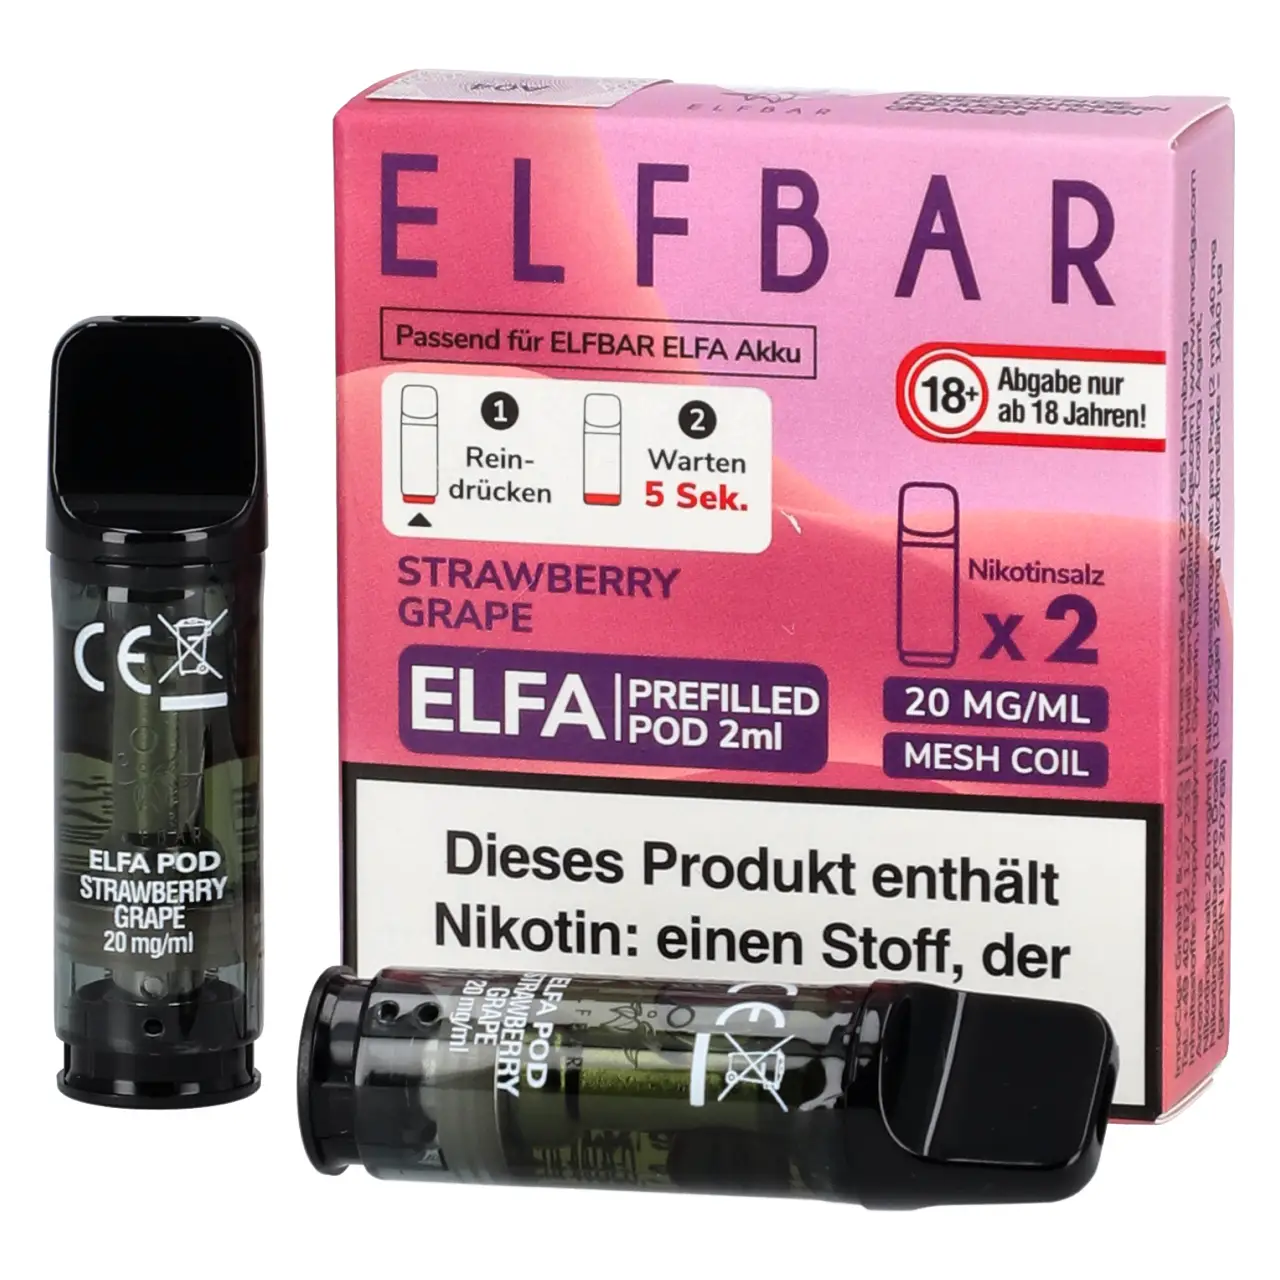 Strawberry Grape - Elf Bar ELFA Prefilled POD für Mehrweg Vape - befüllt mit 2ml Liquid - 2er Packung